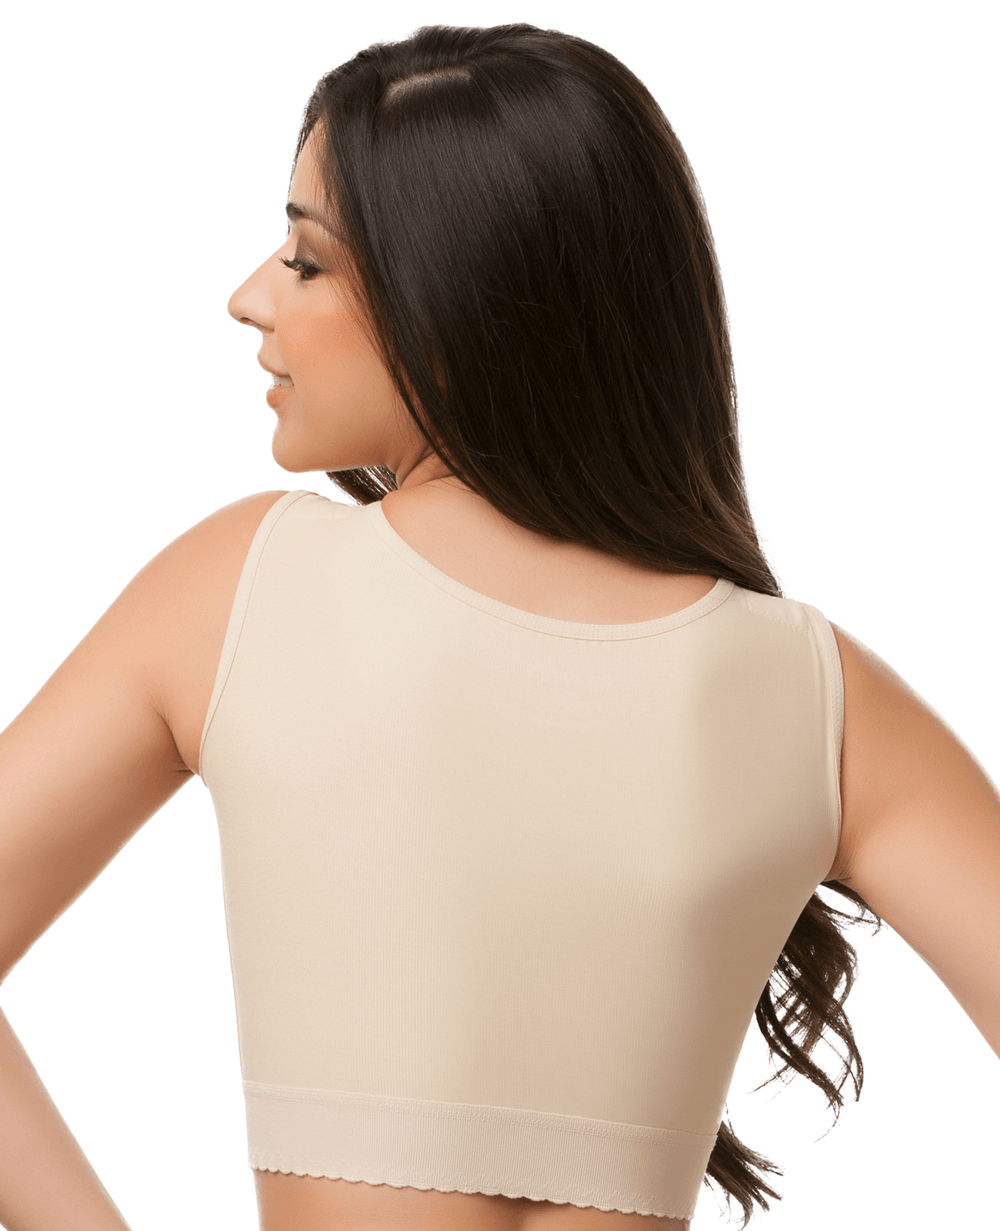 Underbust Length Bra/Vest with Short Sleeves (VS02-SS)